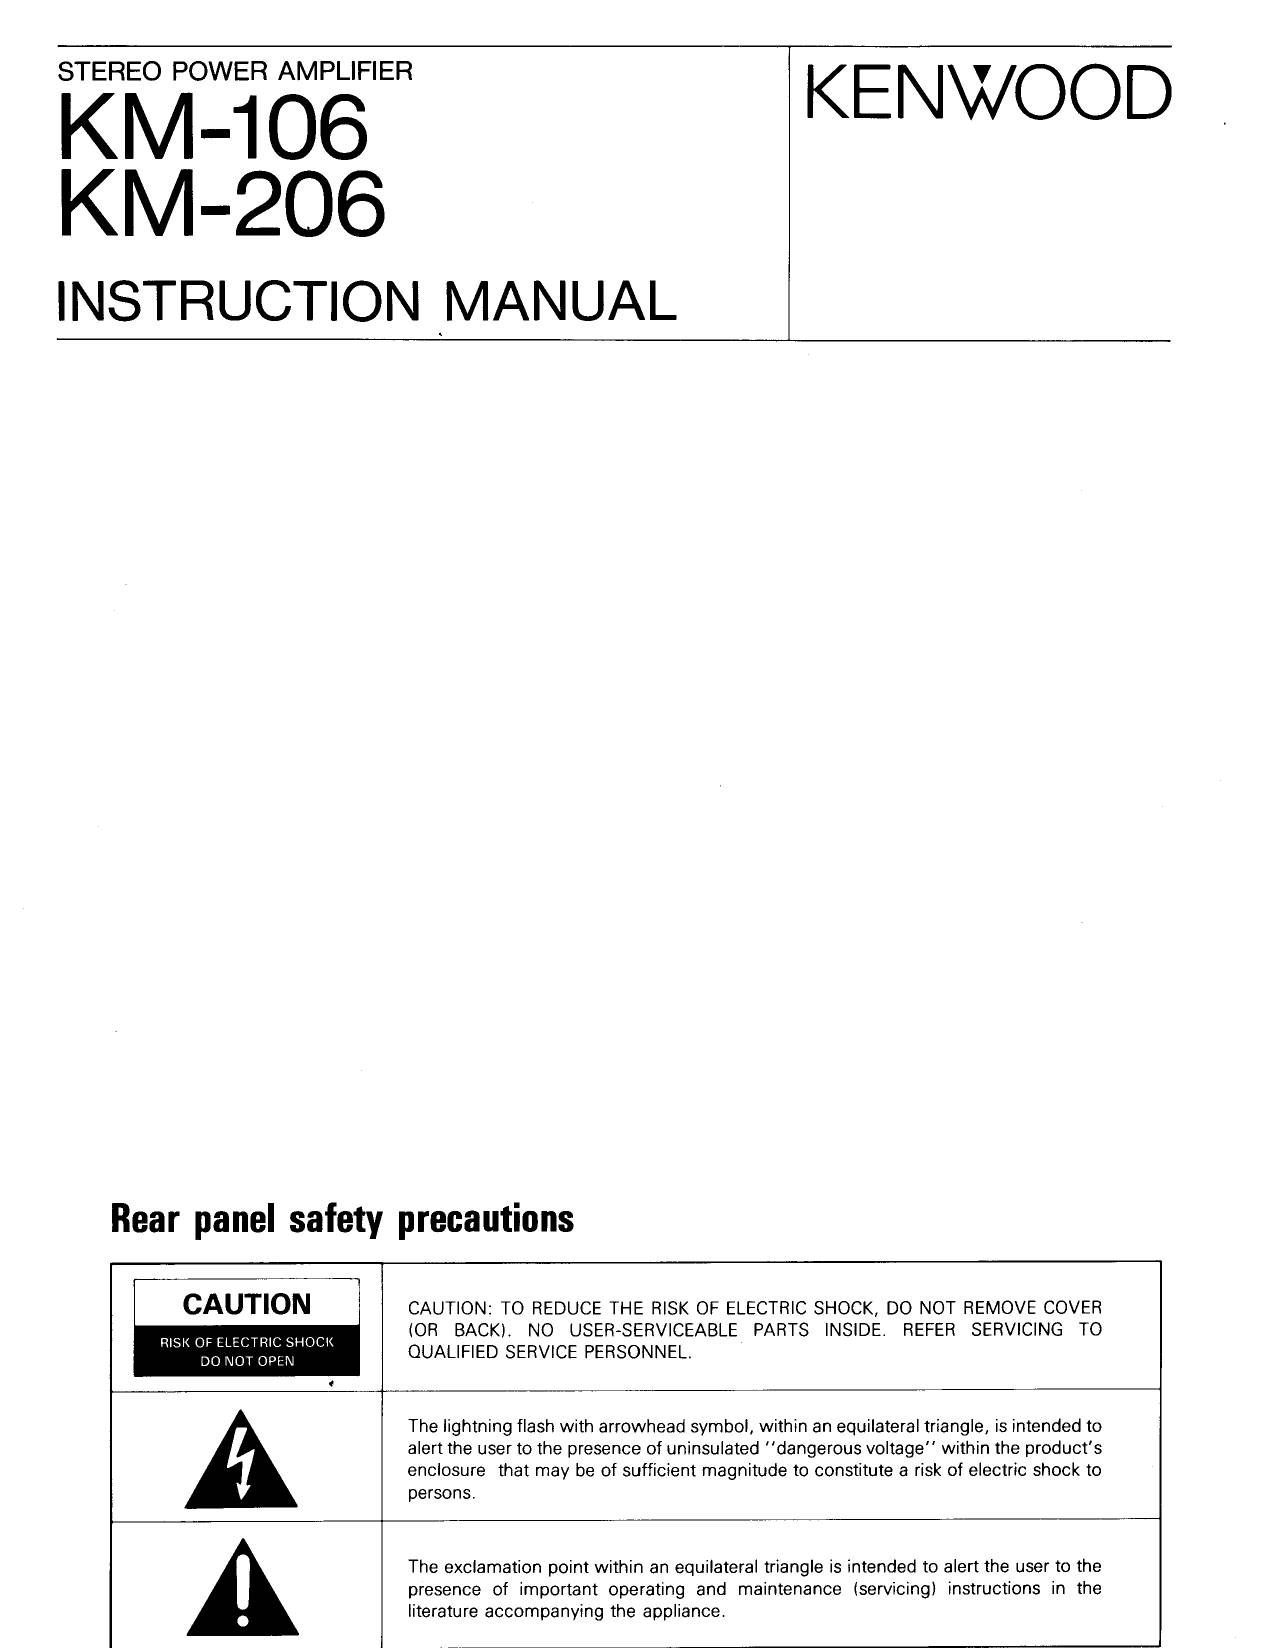 Kenwood KM-206